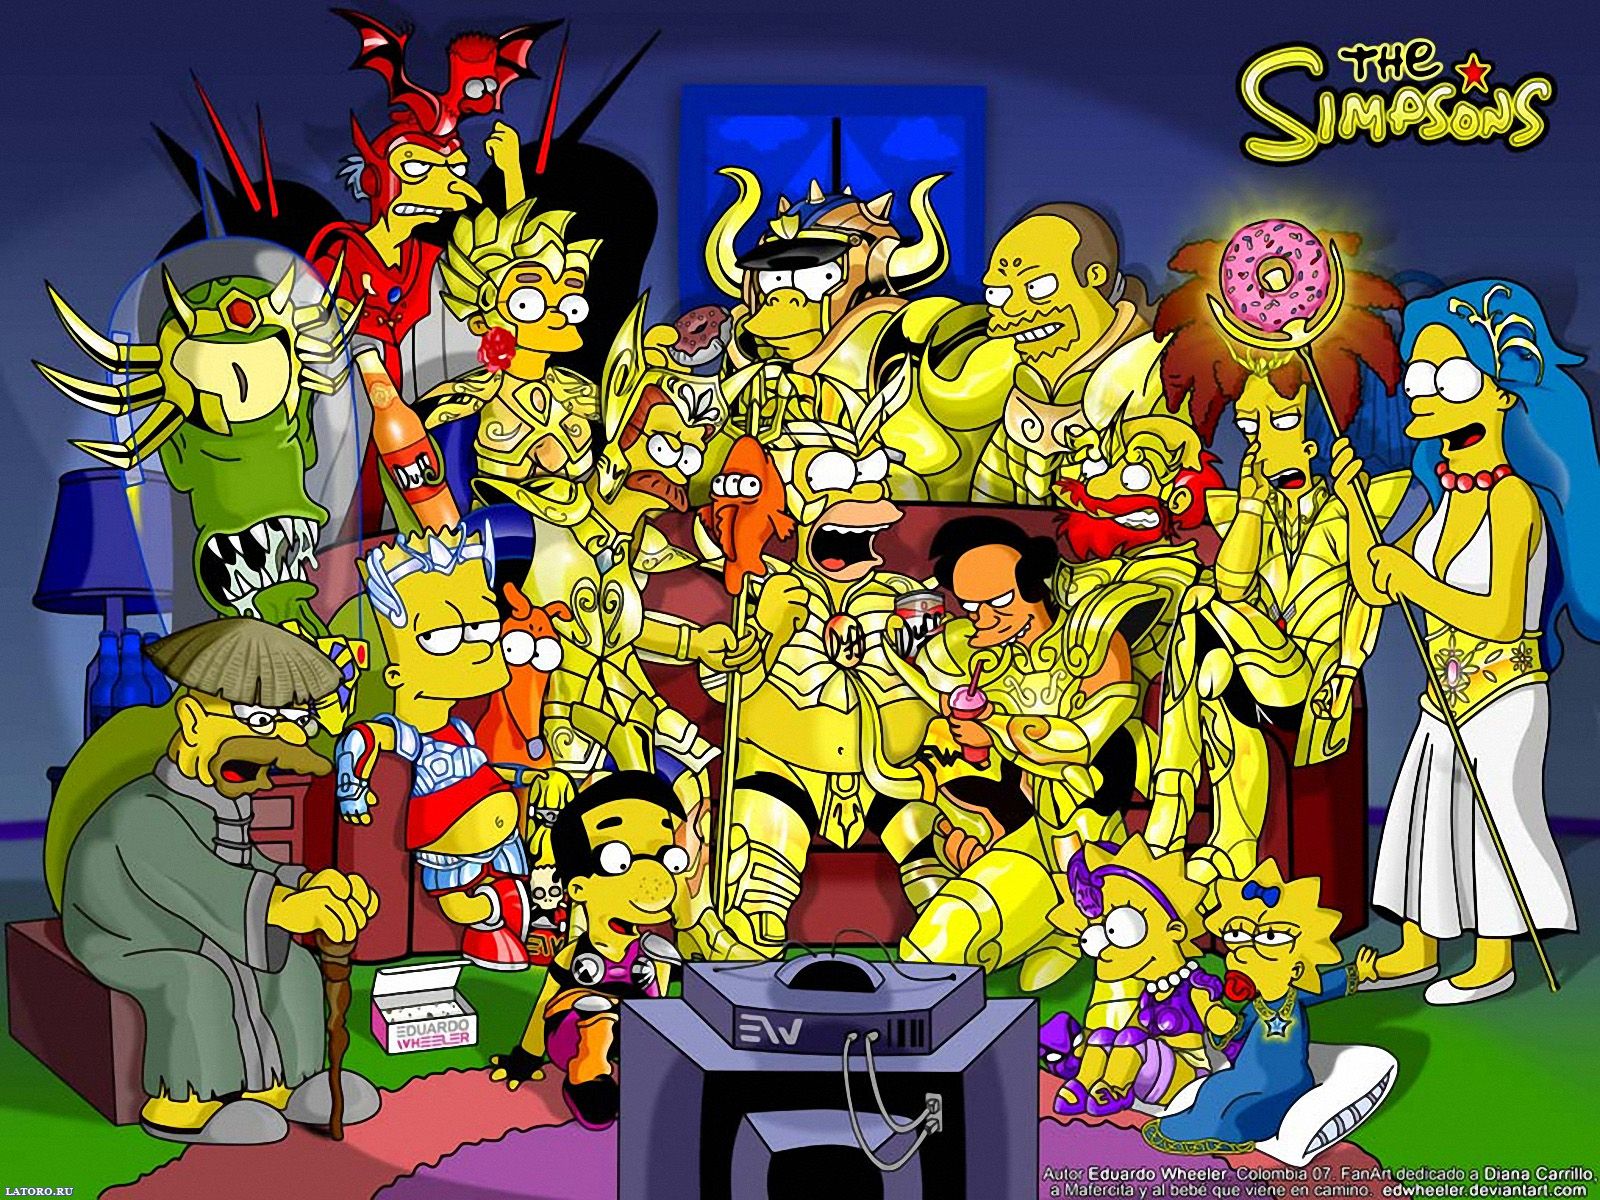 The Simpsons Desktop Wallpaper FREE on Latoro.com